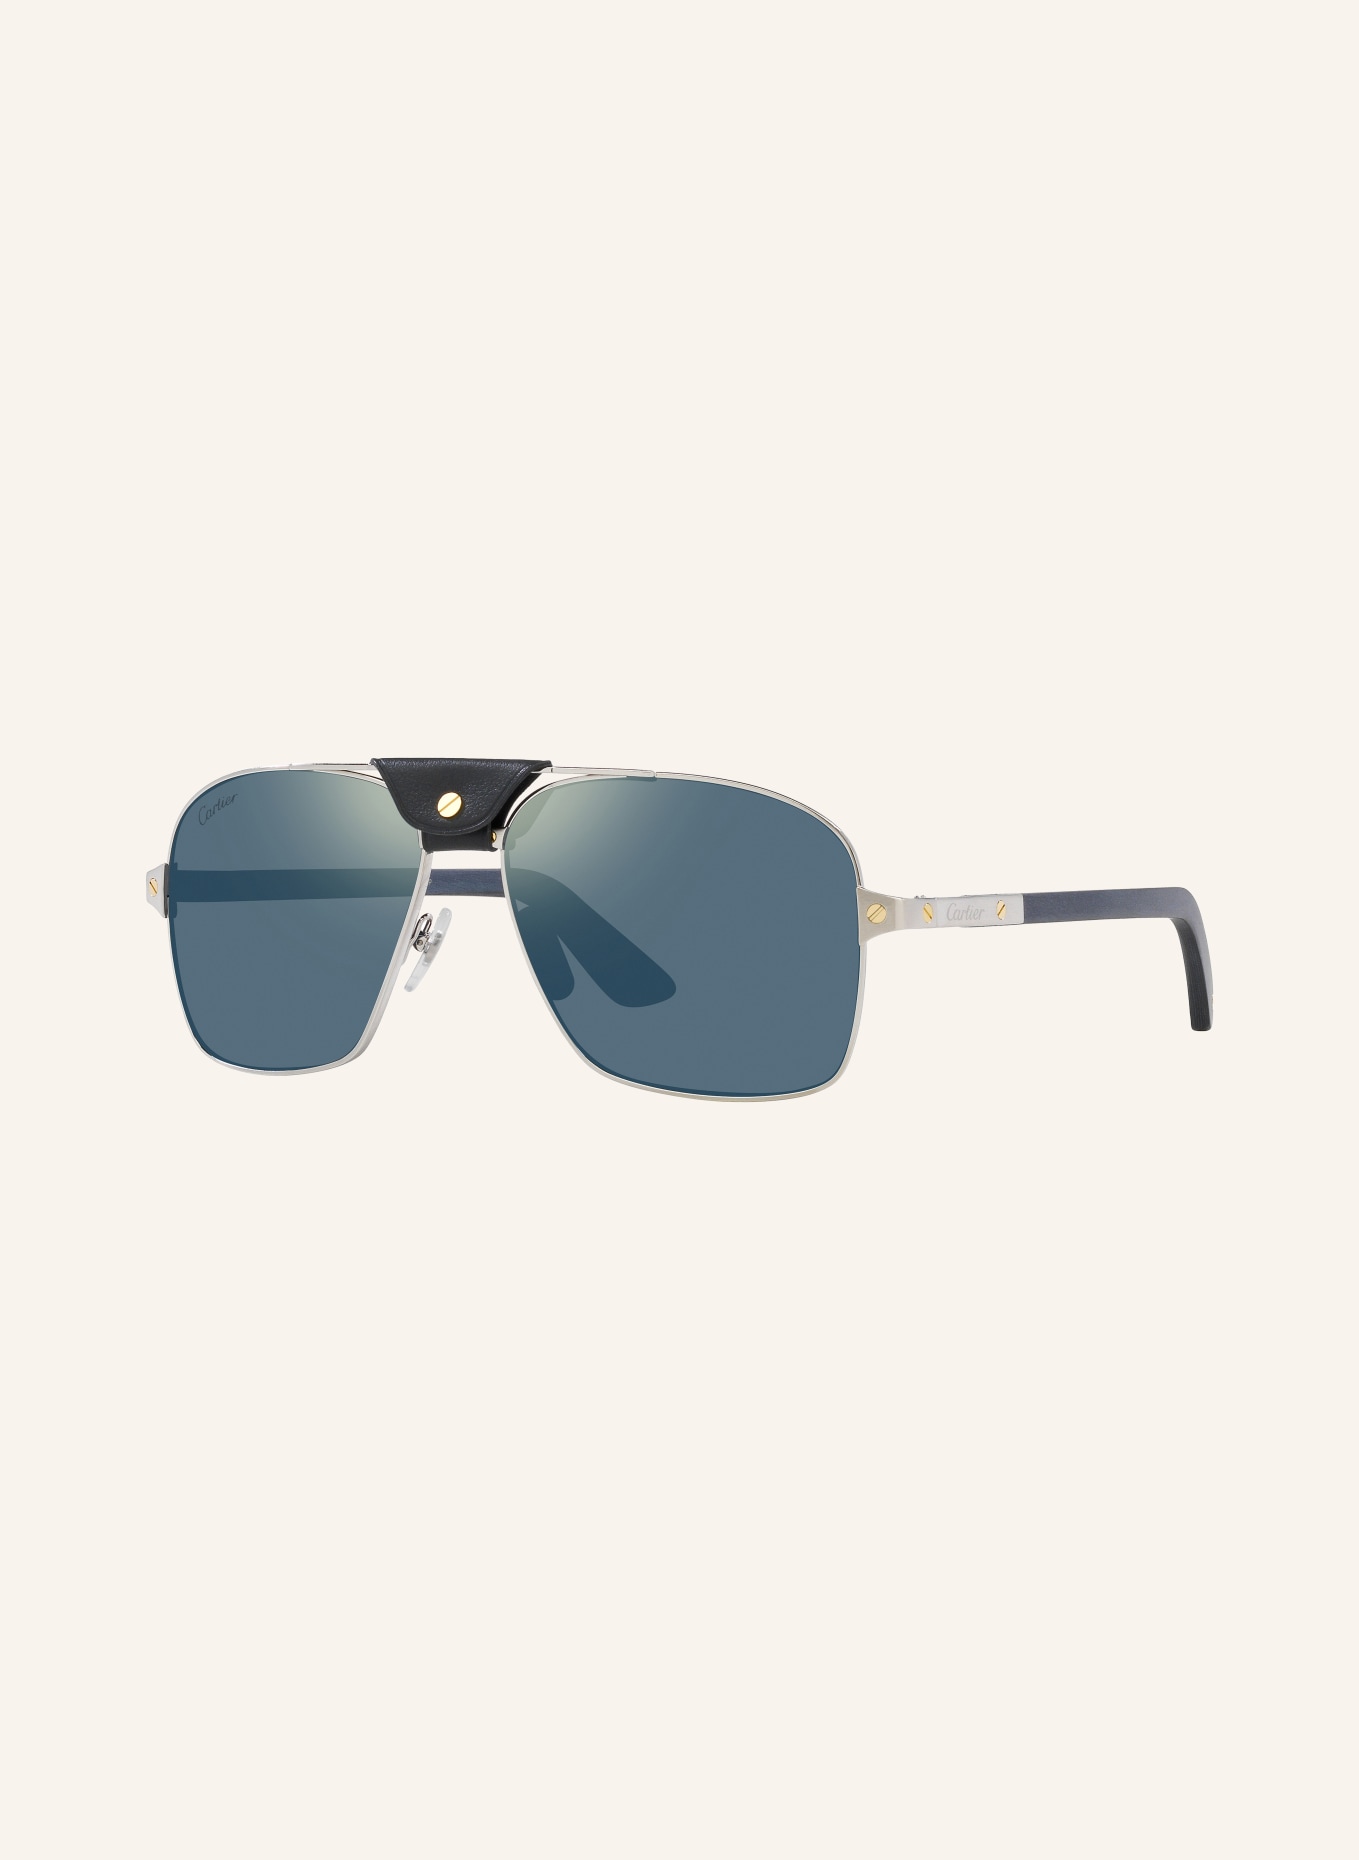 Cartier Core Range CT0121S Sunglasses Square Shape | EyeSpecs.com